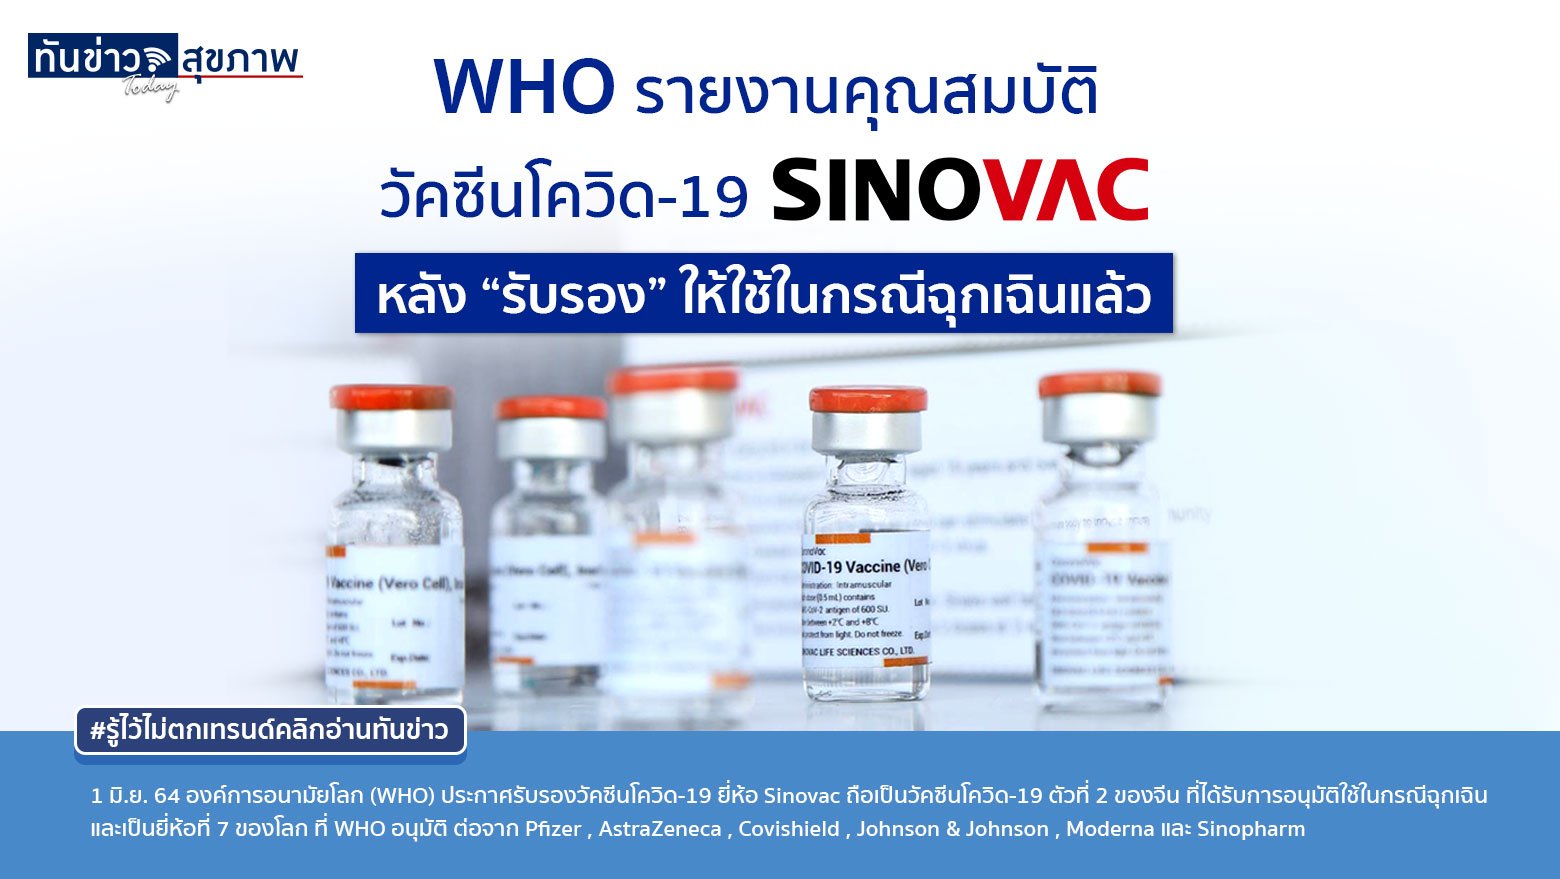 WHO รายงานคุณสมบัติวัคซีนโควิด-19 Sinovac หลัง “รับรอง” ให้ใช้ในกรณีฉุกเฉินแล้ว